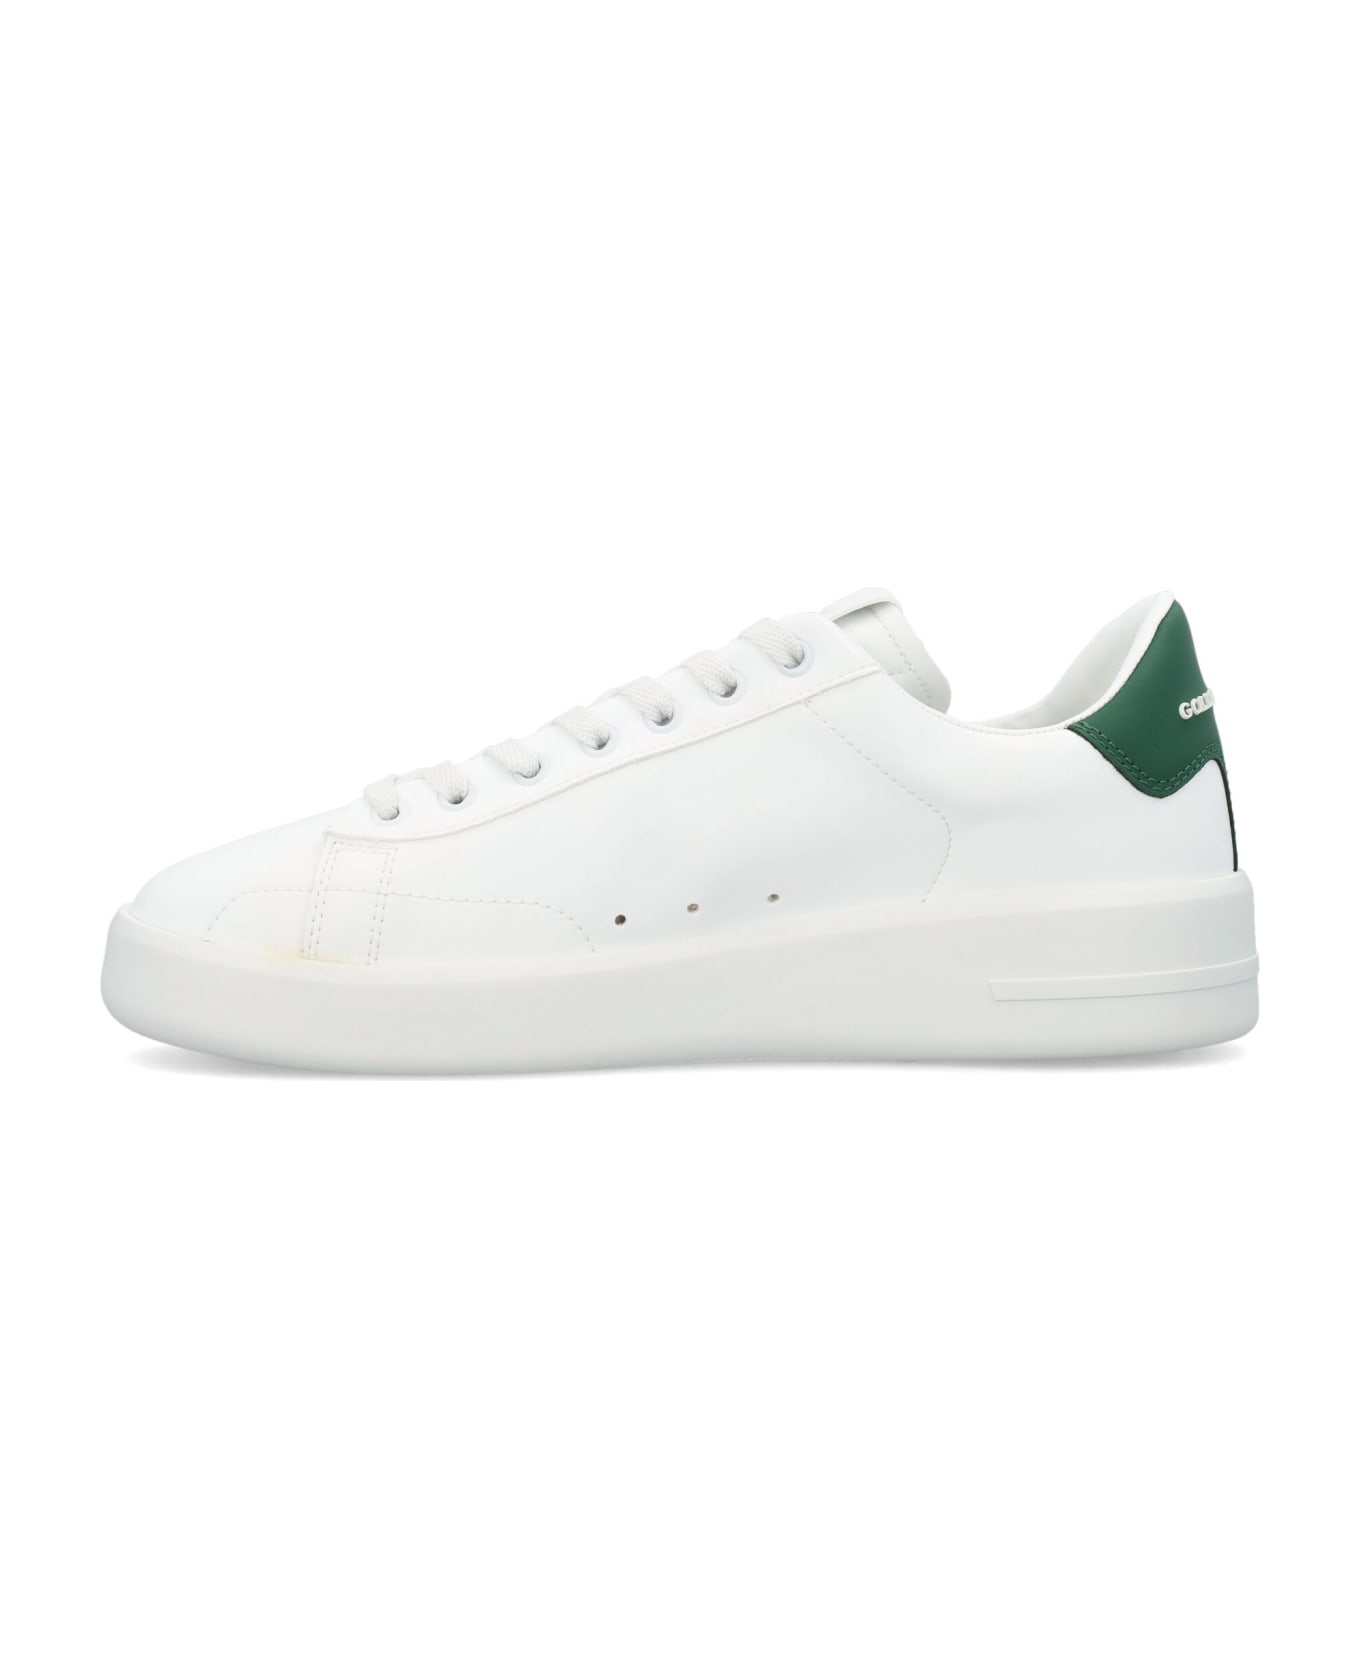 Golden Goose Purestar Low-top Sneakers - White/Green スニーカー